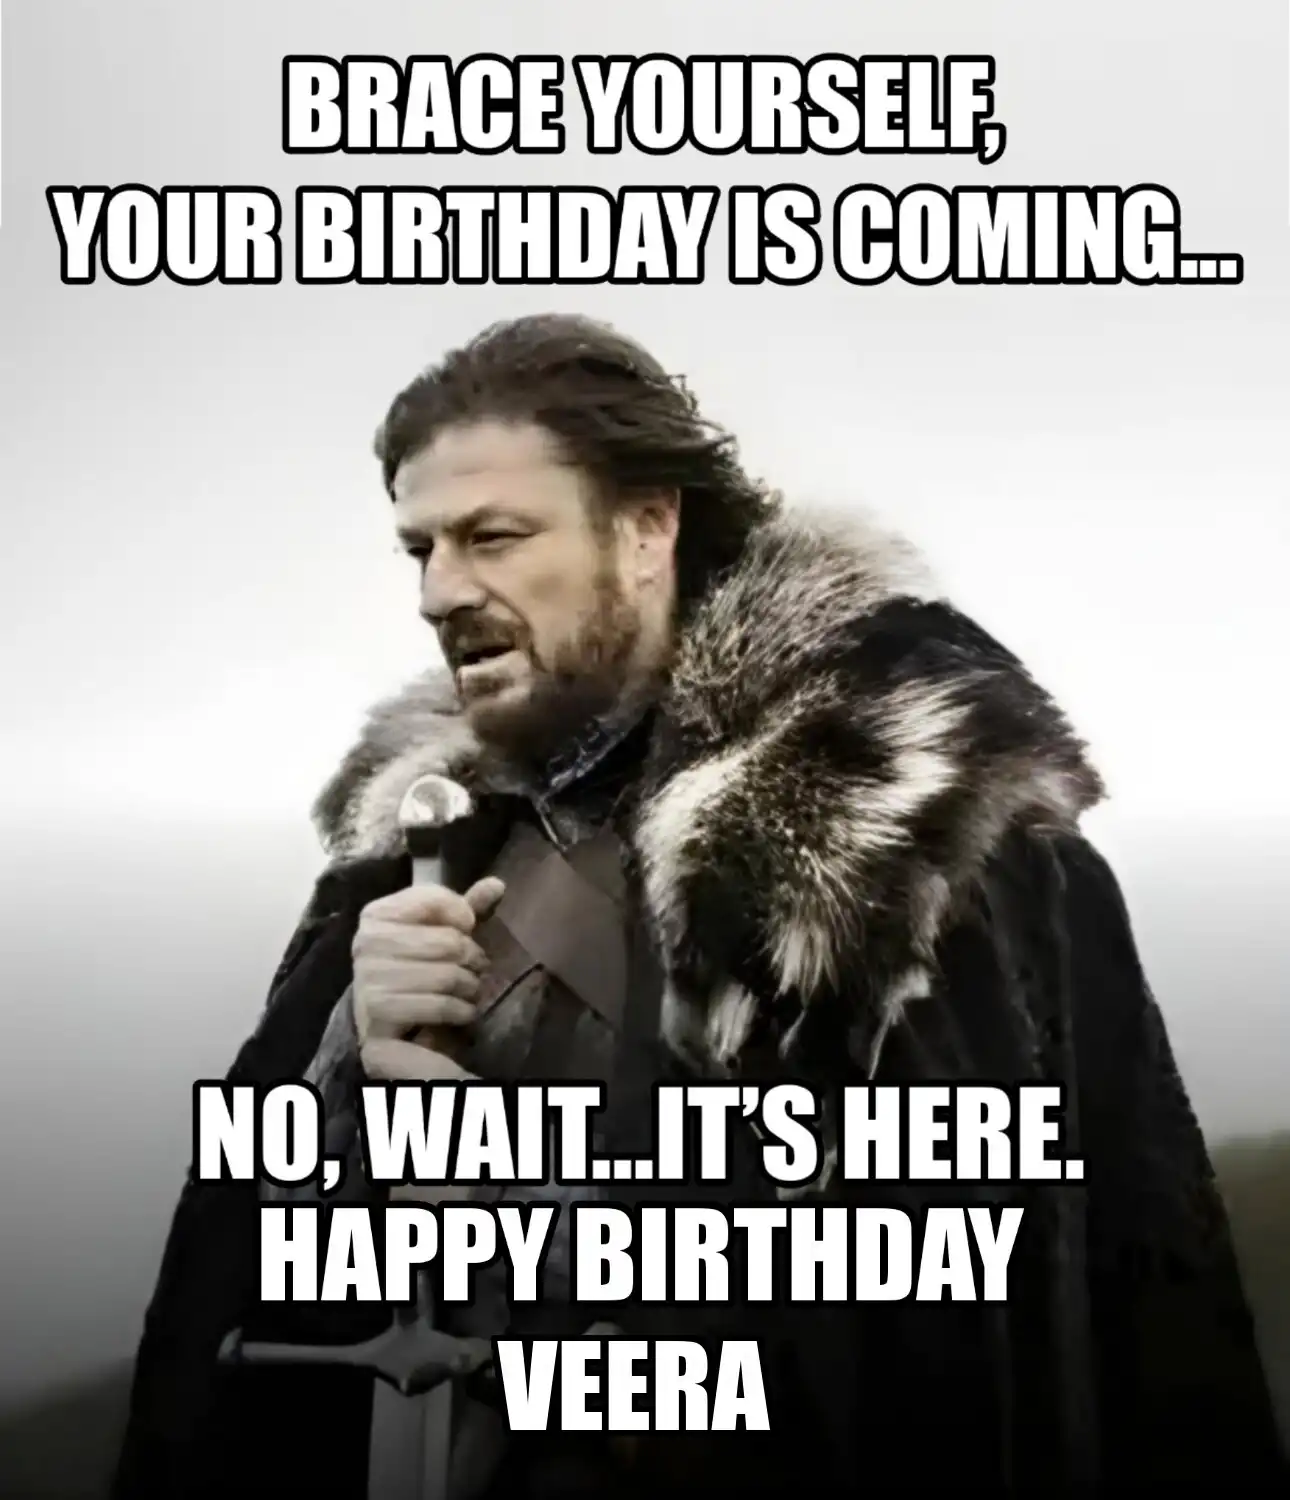 Happy Birthday Veera Brace Yourself Your Birthday Is Coming Meme